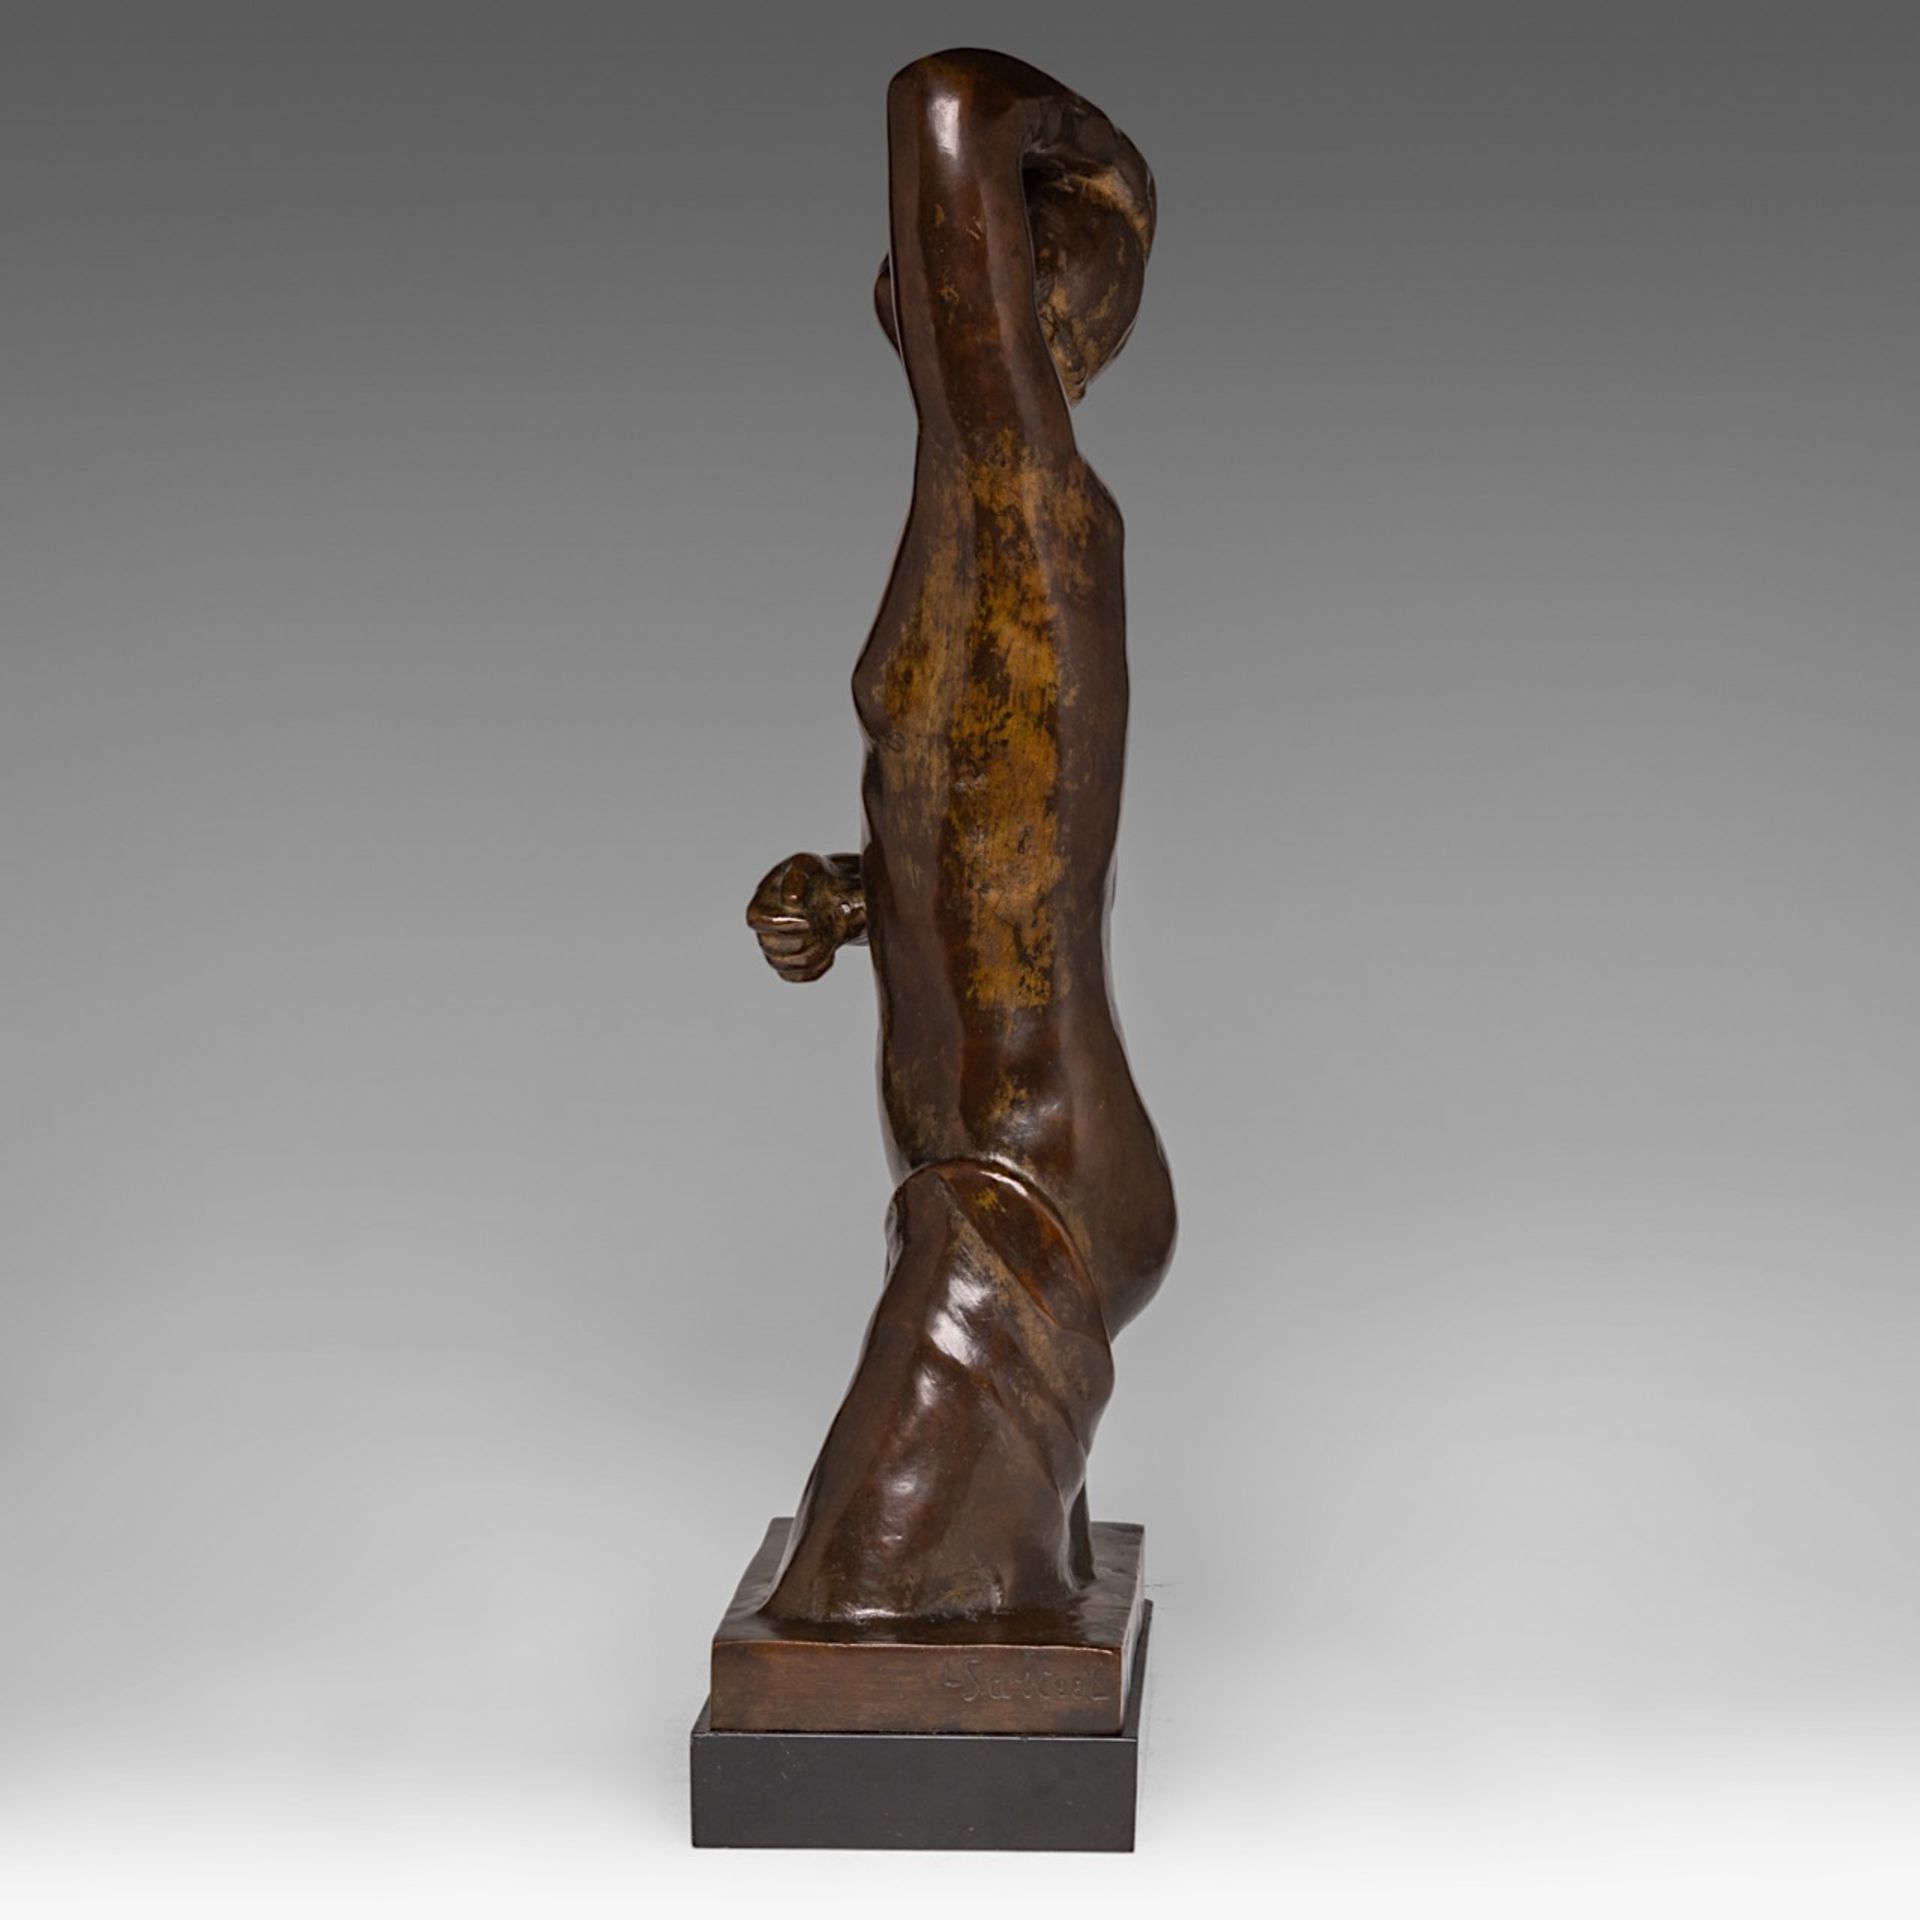 Leon Sarteel (1882-1942), Baigneuse, patinated bronze, casted by G. Vindevogel, Zwijnaarde, H 58 cm - Bild 4 aus 7